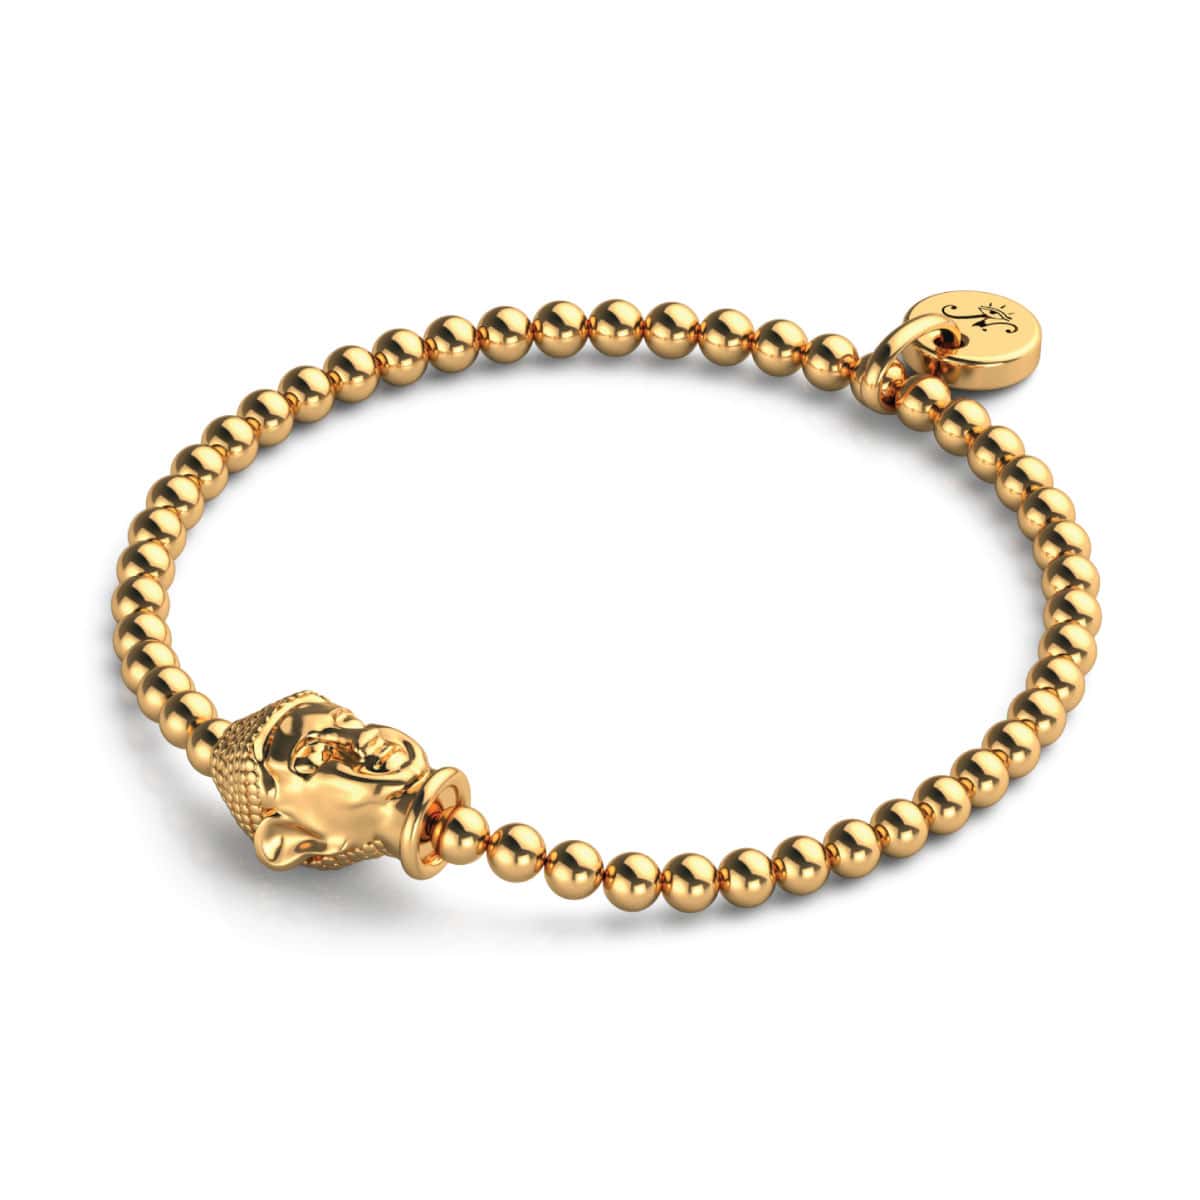 Turquoise antique gold stone Buddha head bracelet at ₹1250 | Azilaa